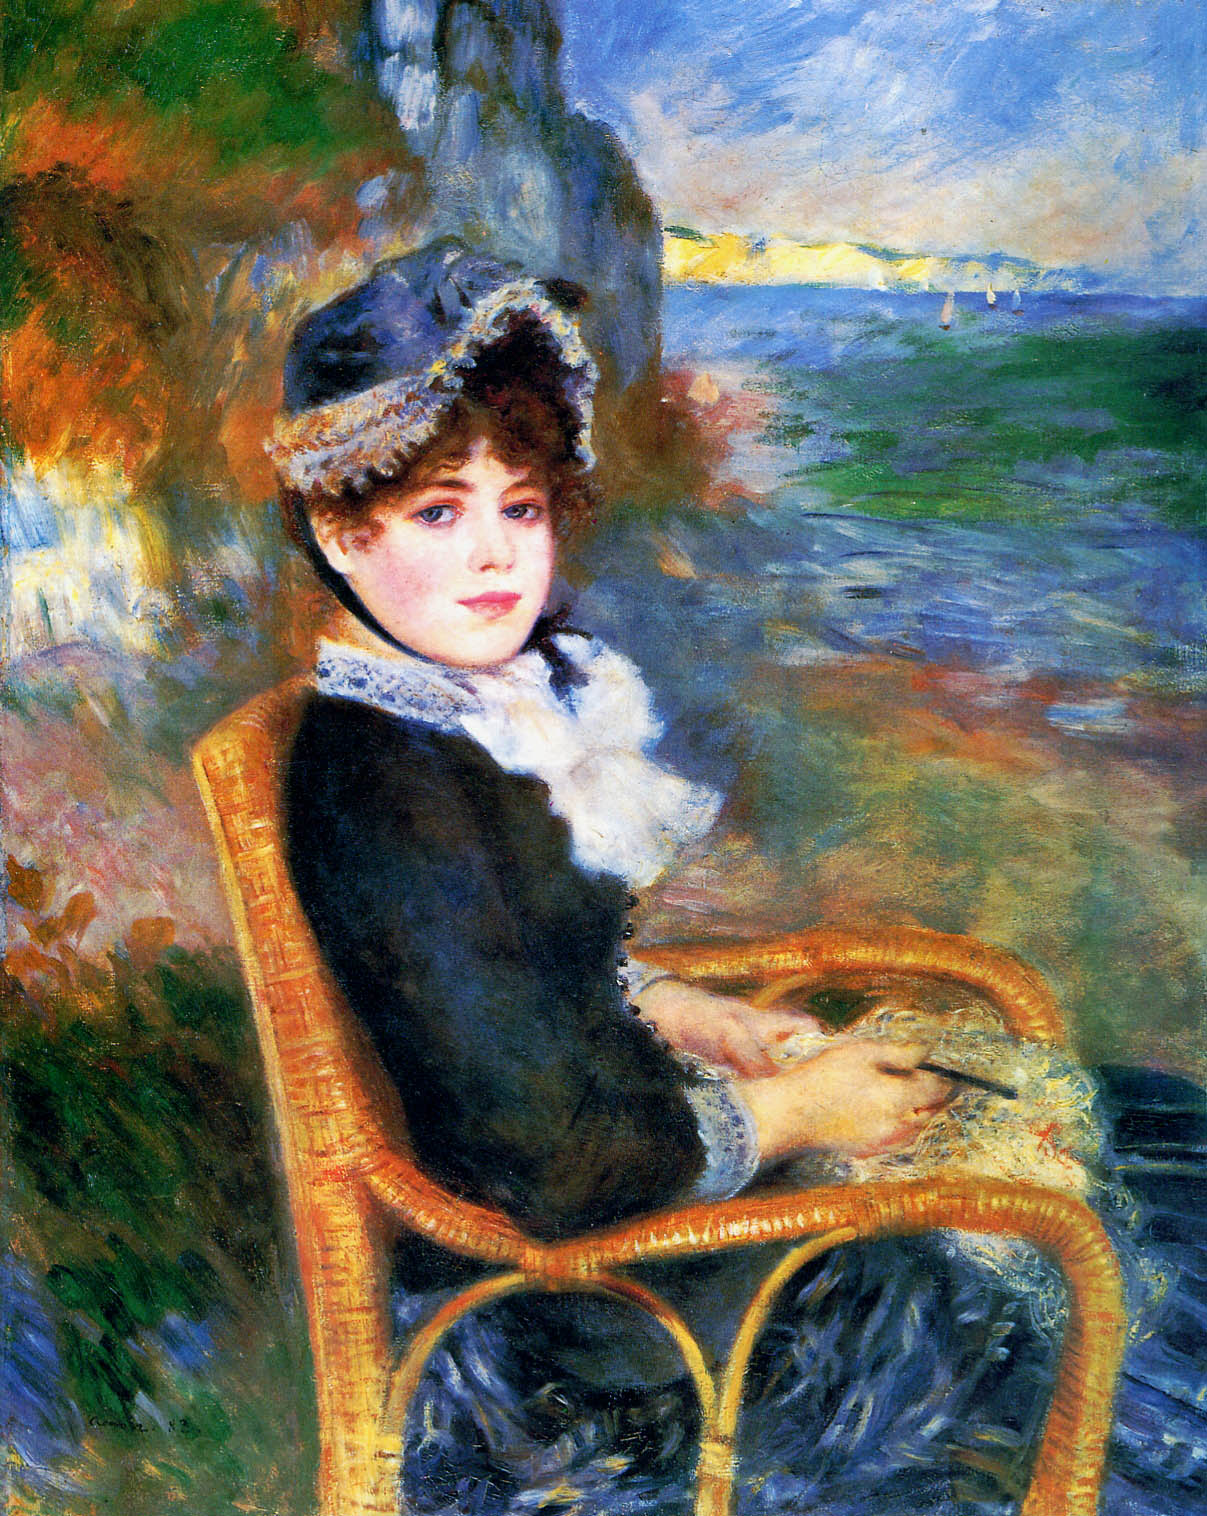 By the Seashore by Renoir - Pierre-Auguste Renoir painting on canvas